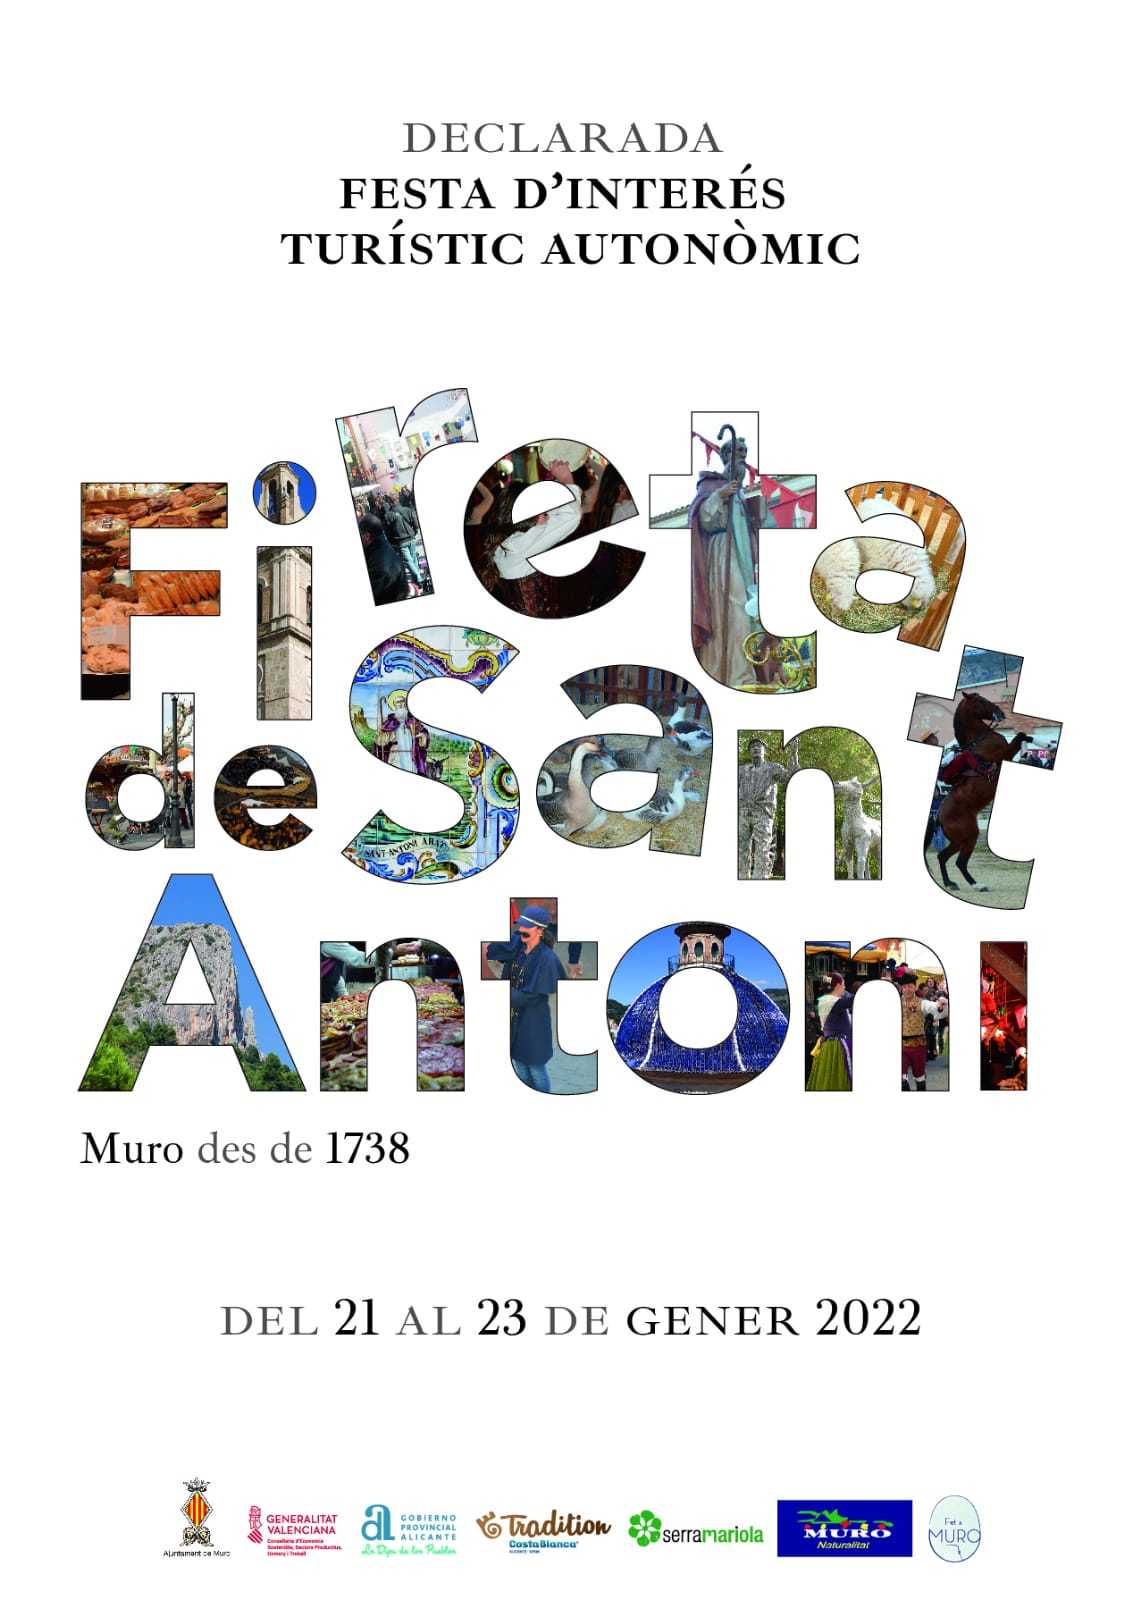 Fireta de Sant Antoni de Muro de Alcoy - Declarada de Interés Turístico Autonómico